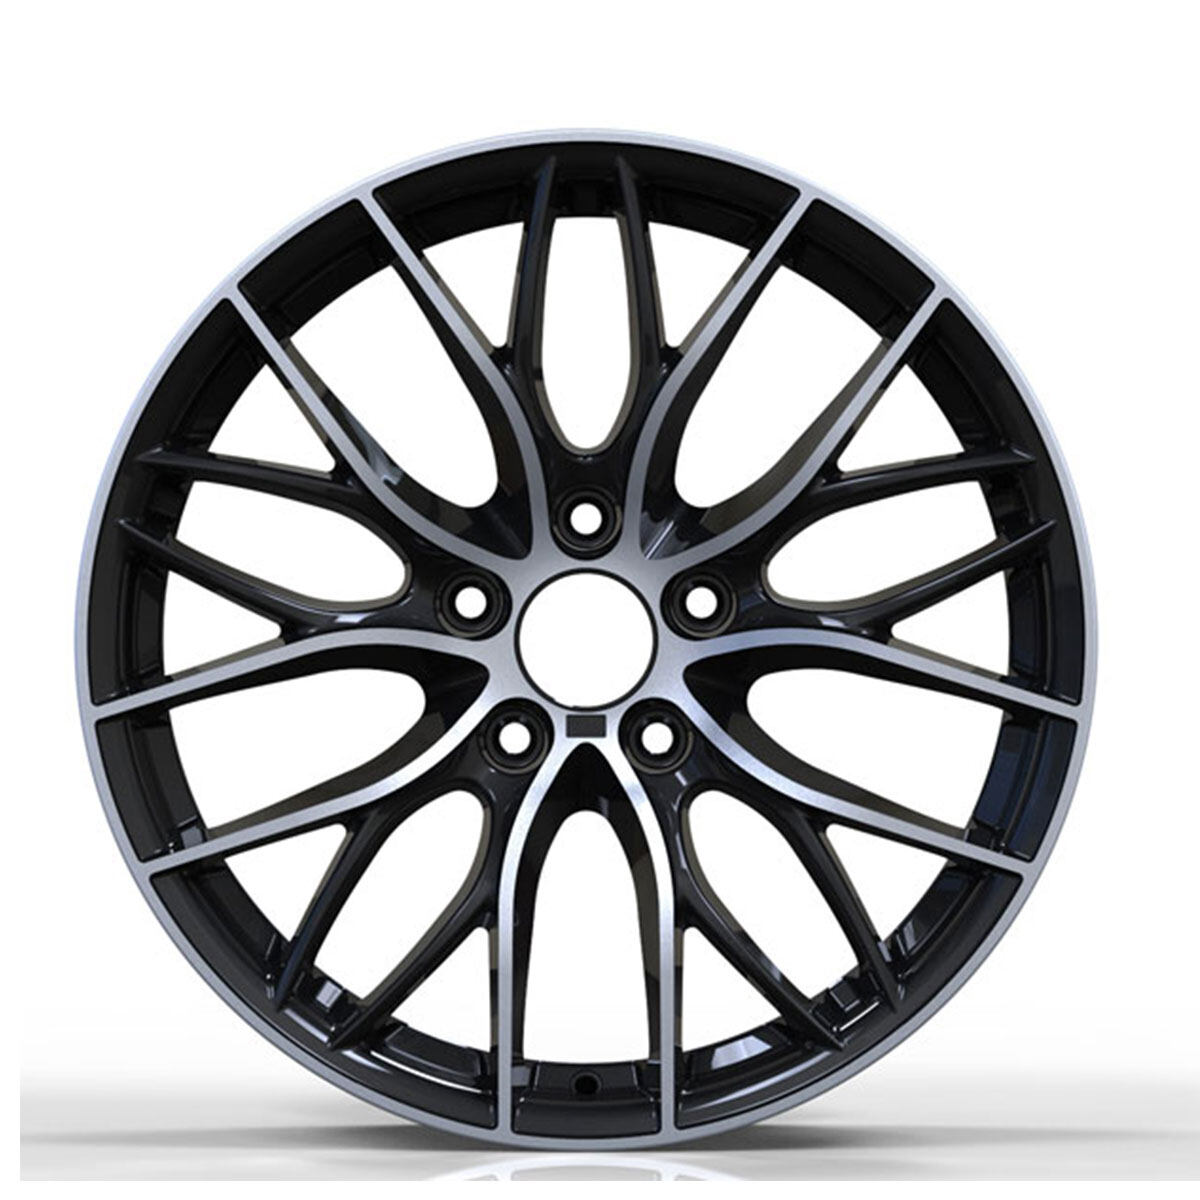 18-20 inch BMW Replica Alloy Wheel Custom Wholesale